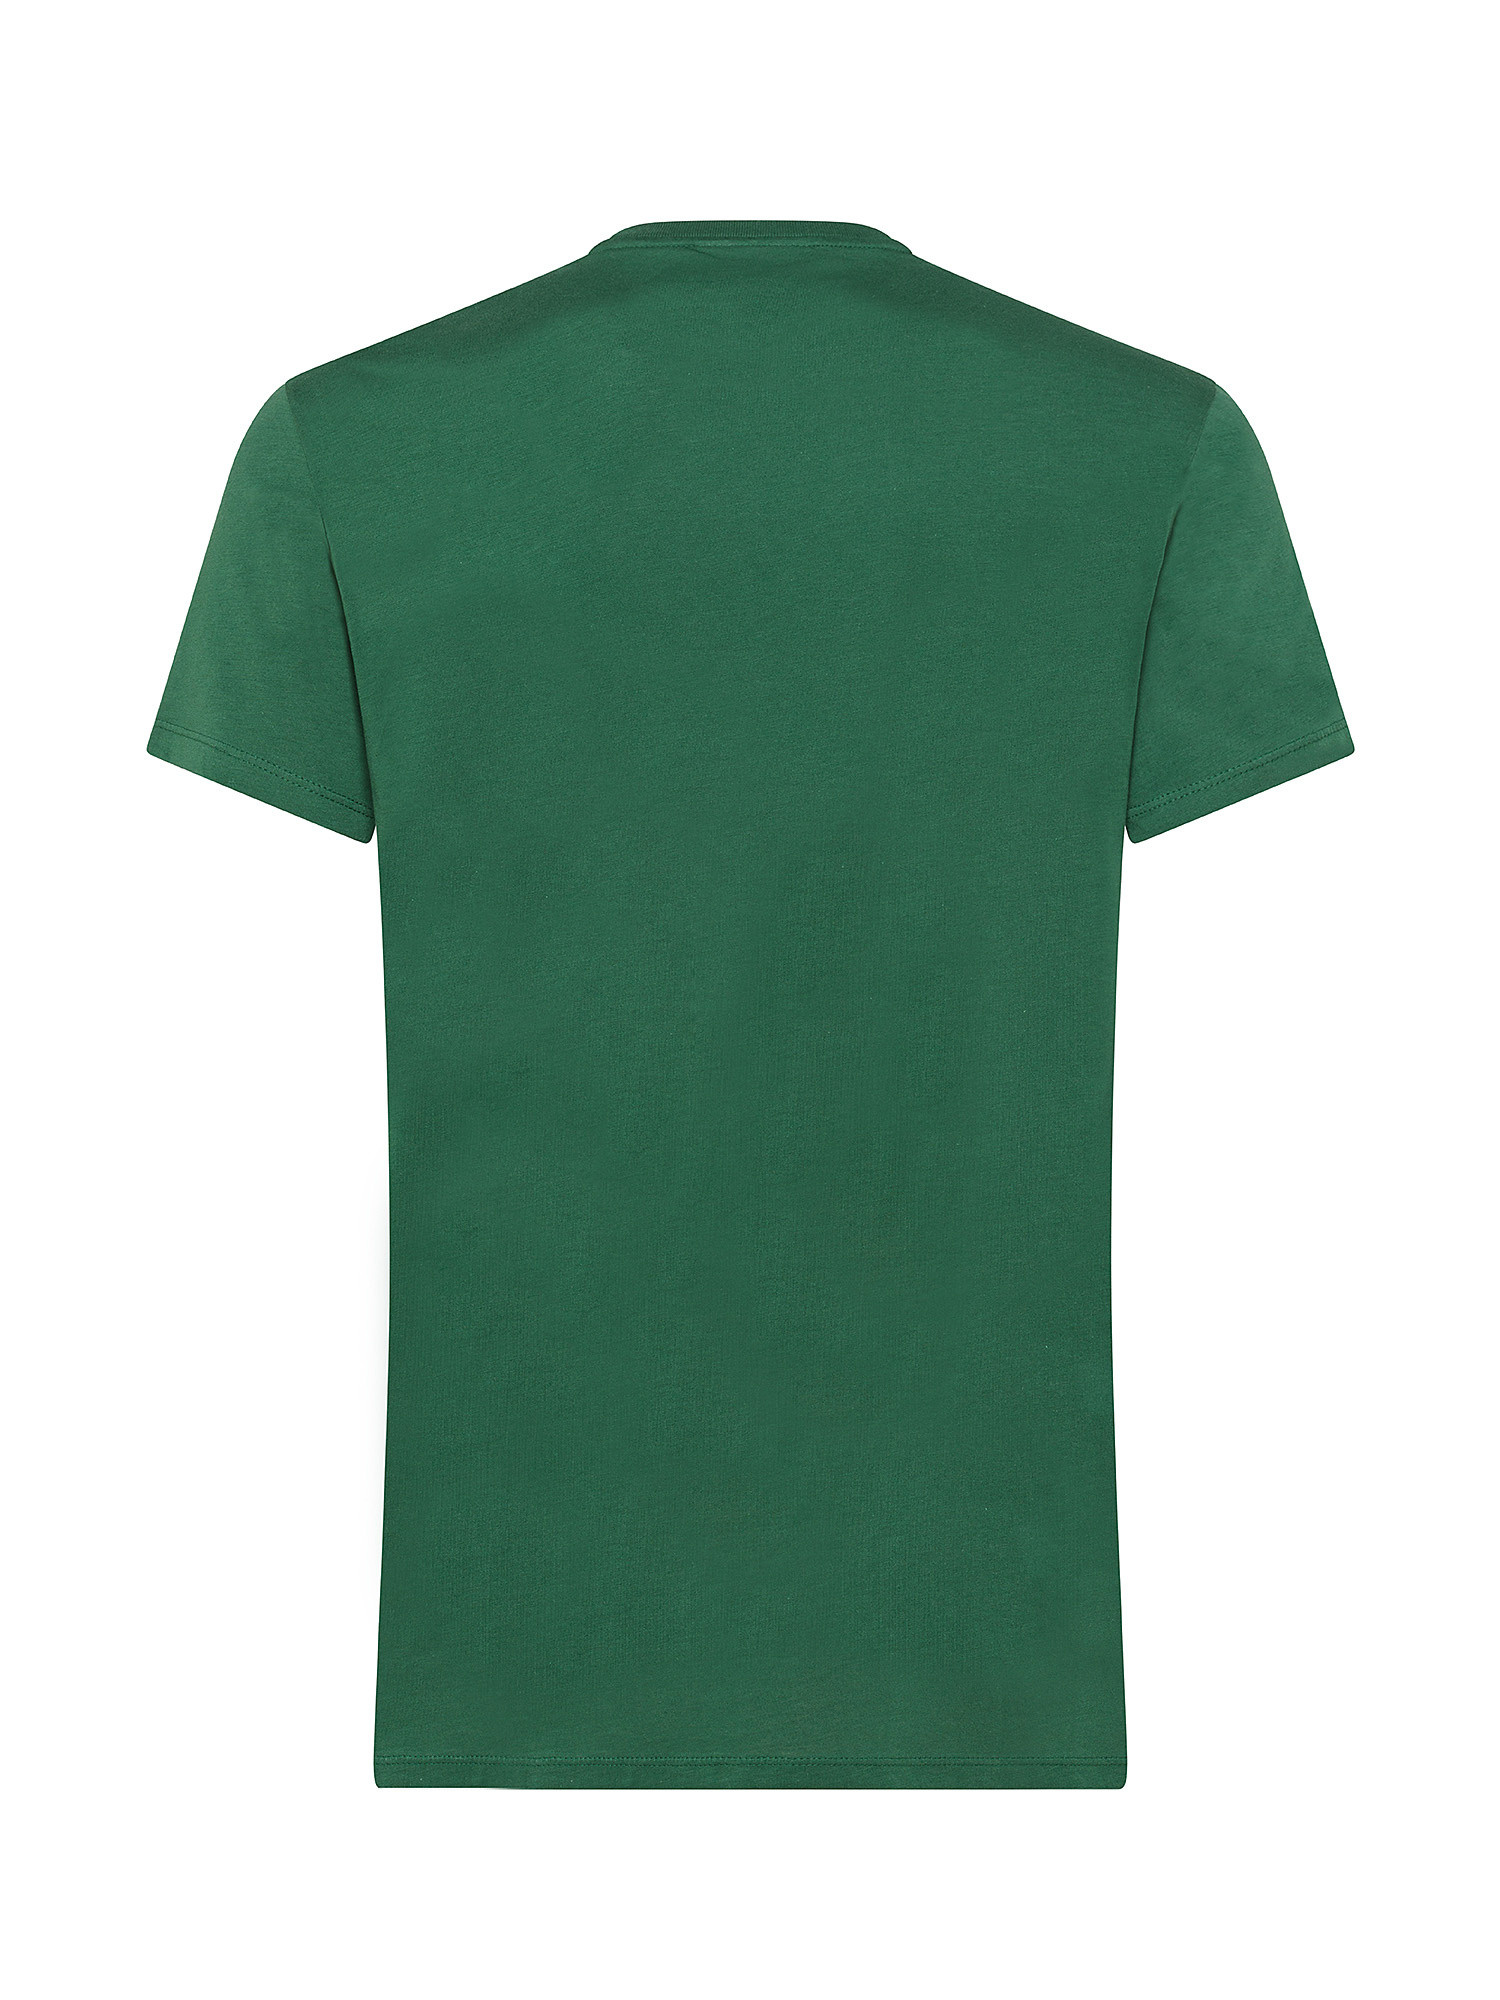 Lacoste - Pima cotton jersey crewneck T-shirt, Green, large image number 1